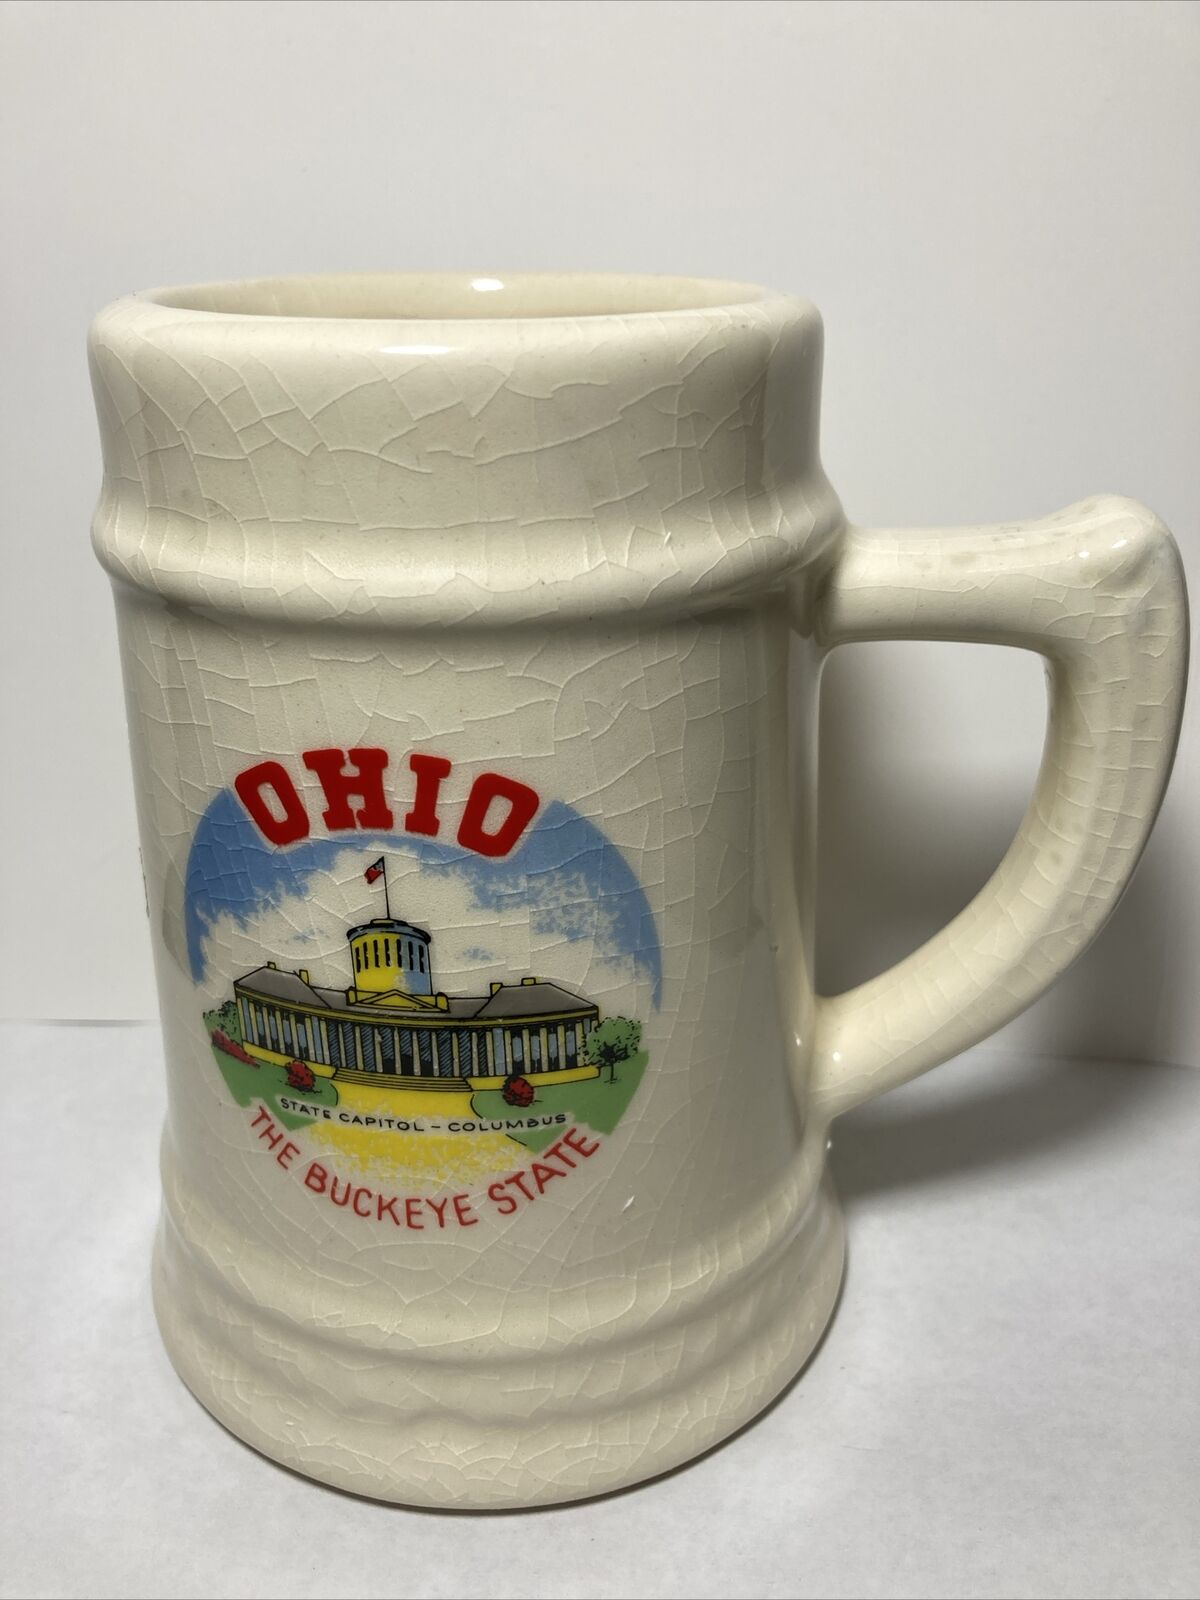 Ohio The Buckeye State Coffee Mug Cup State Capitol - Columbus Souvenir